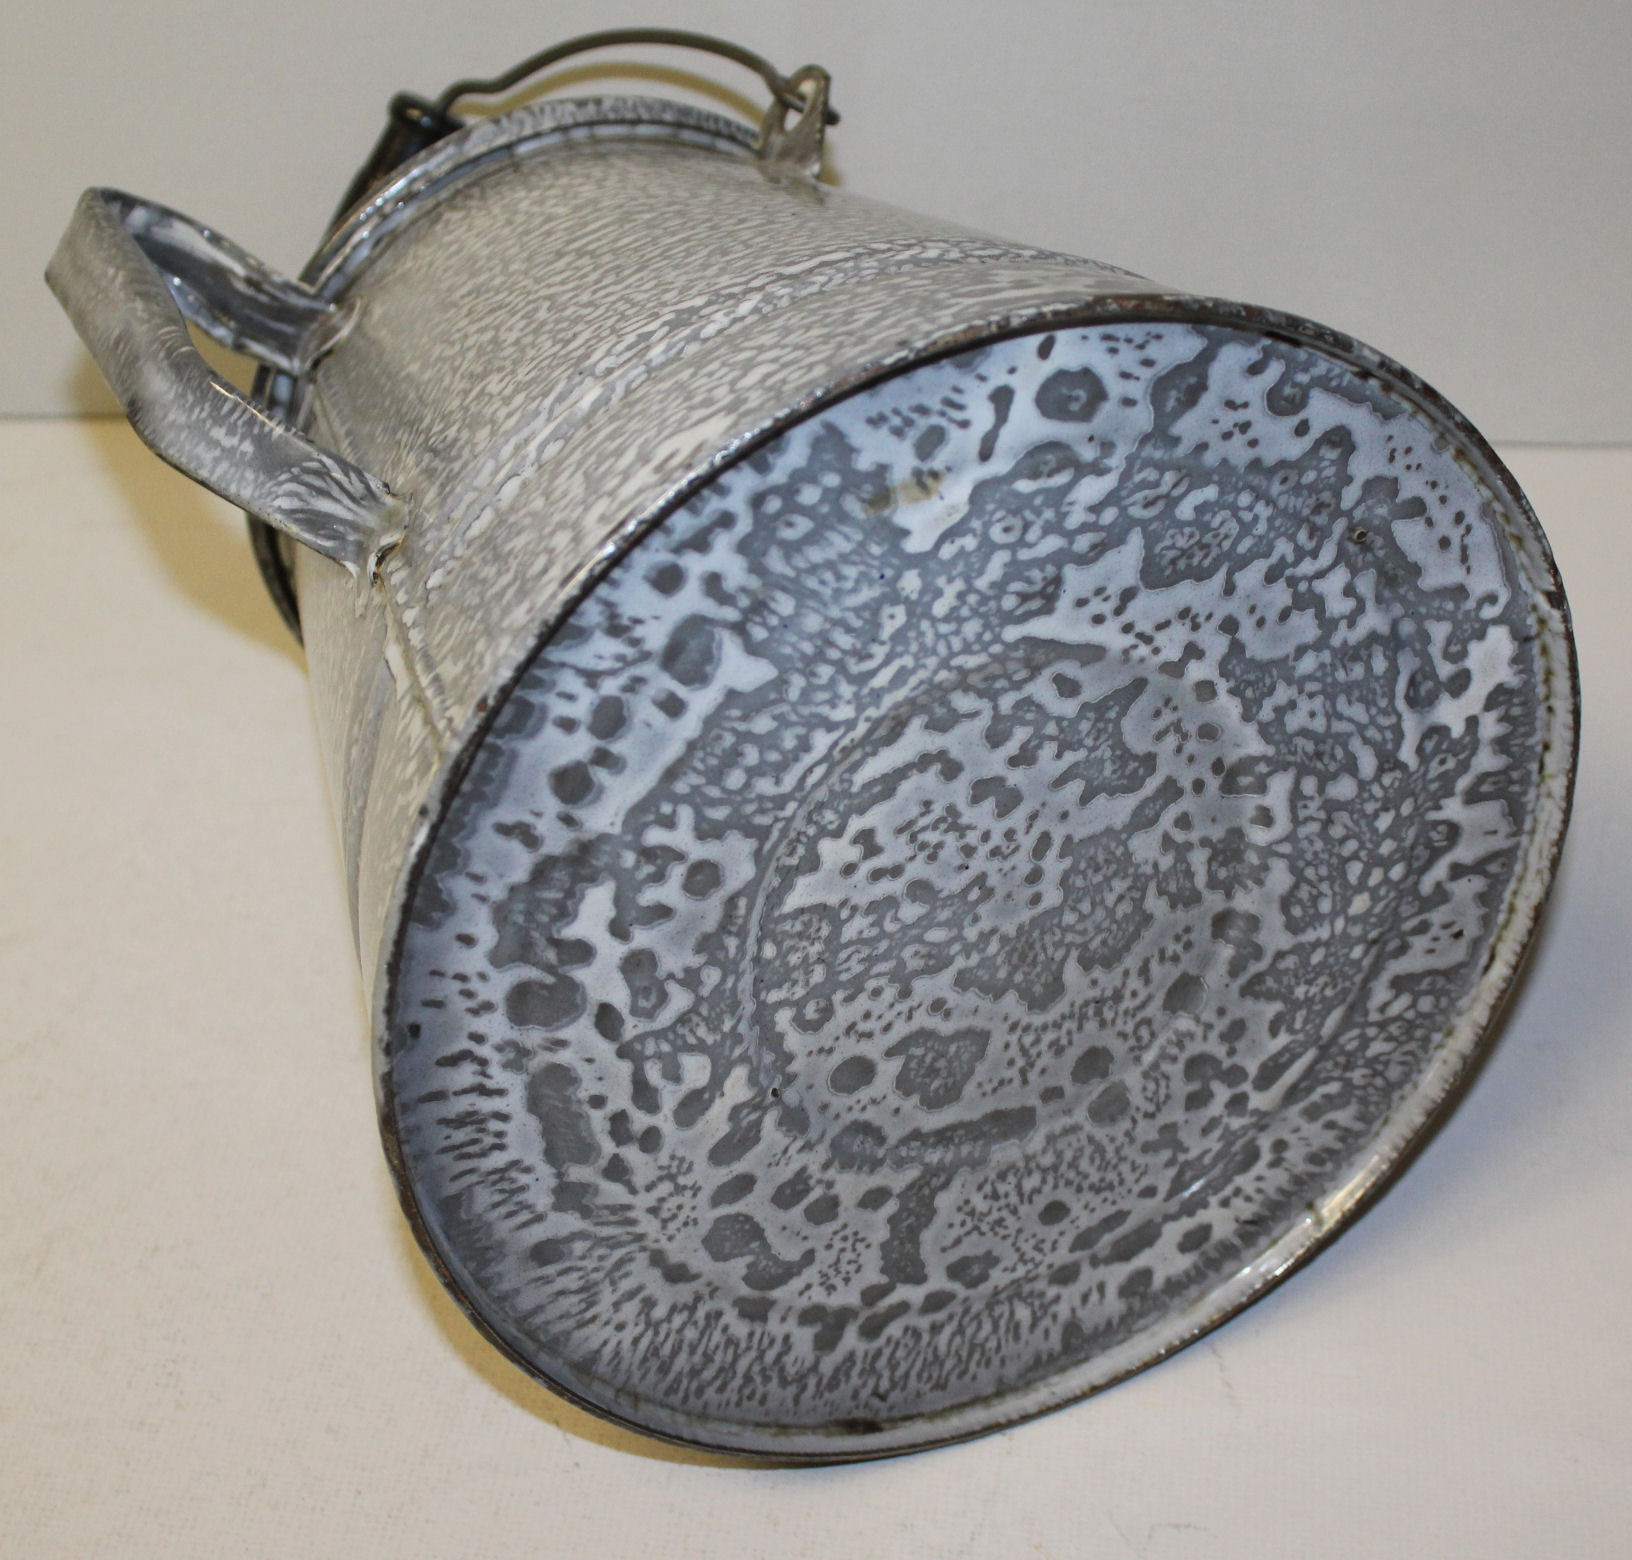 Vintage Large Granite Ware Enamel Double Handle Cowboy Coffee Pot